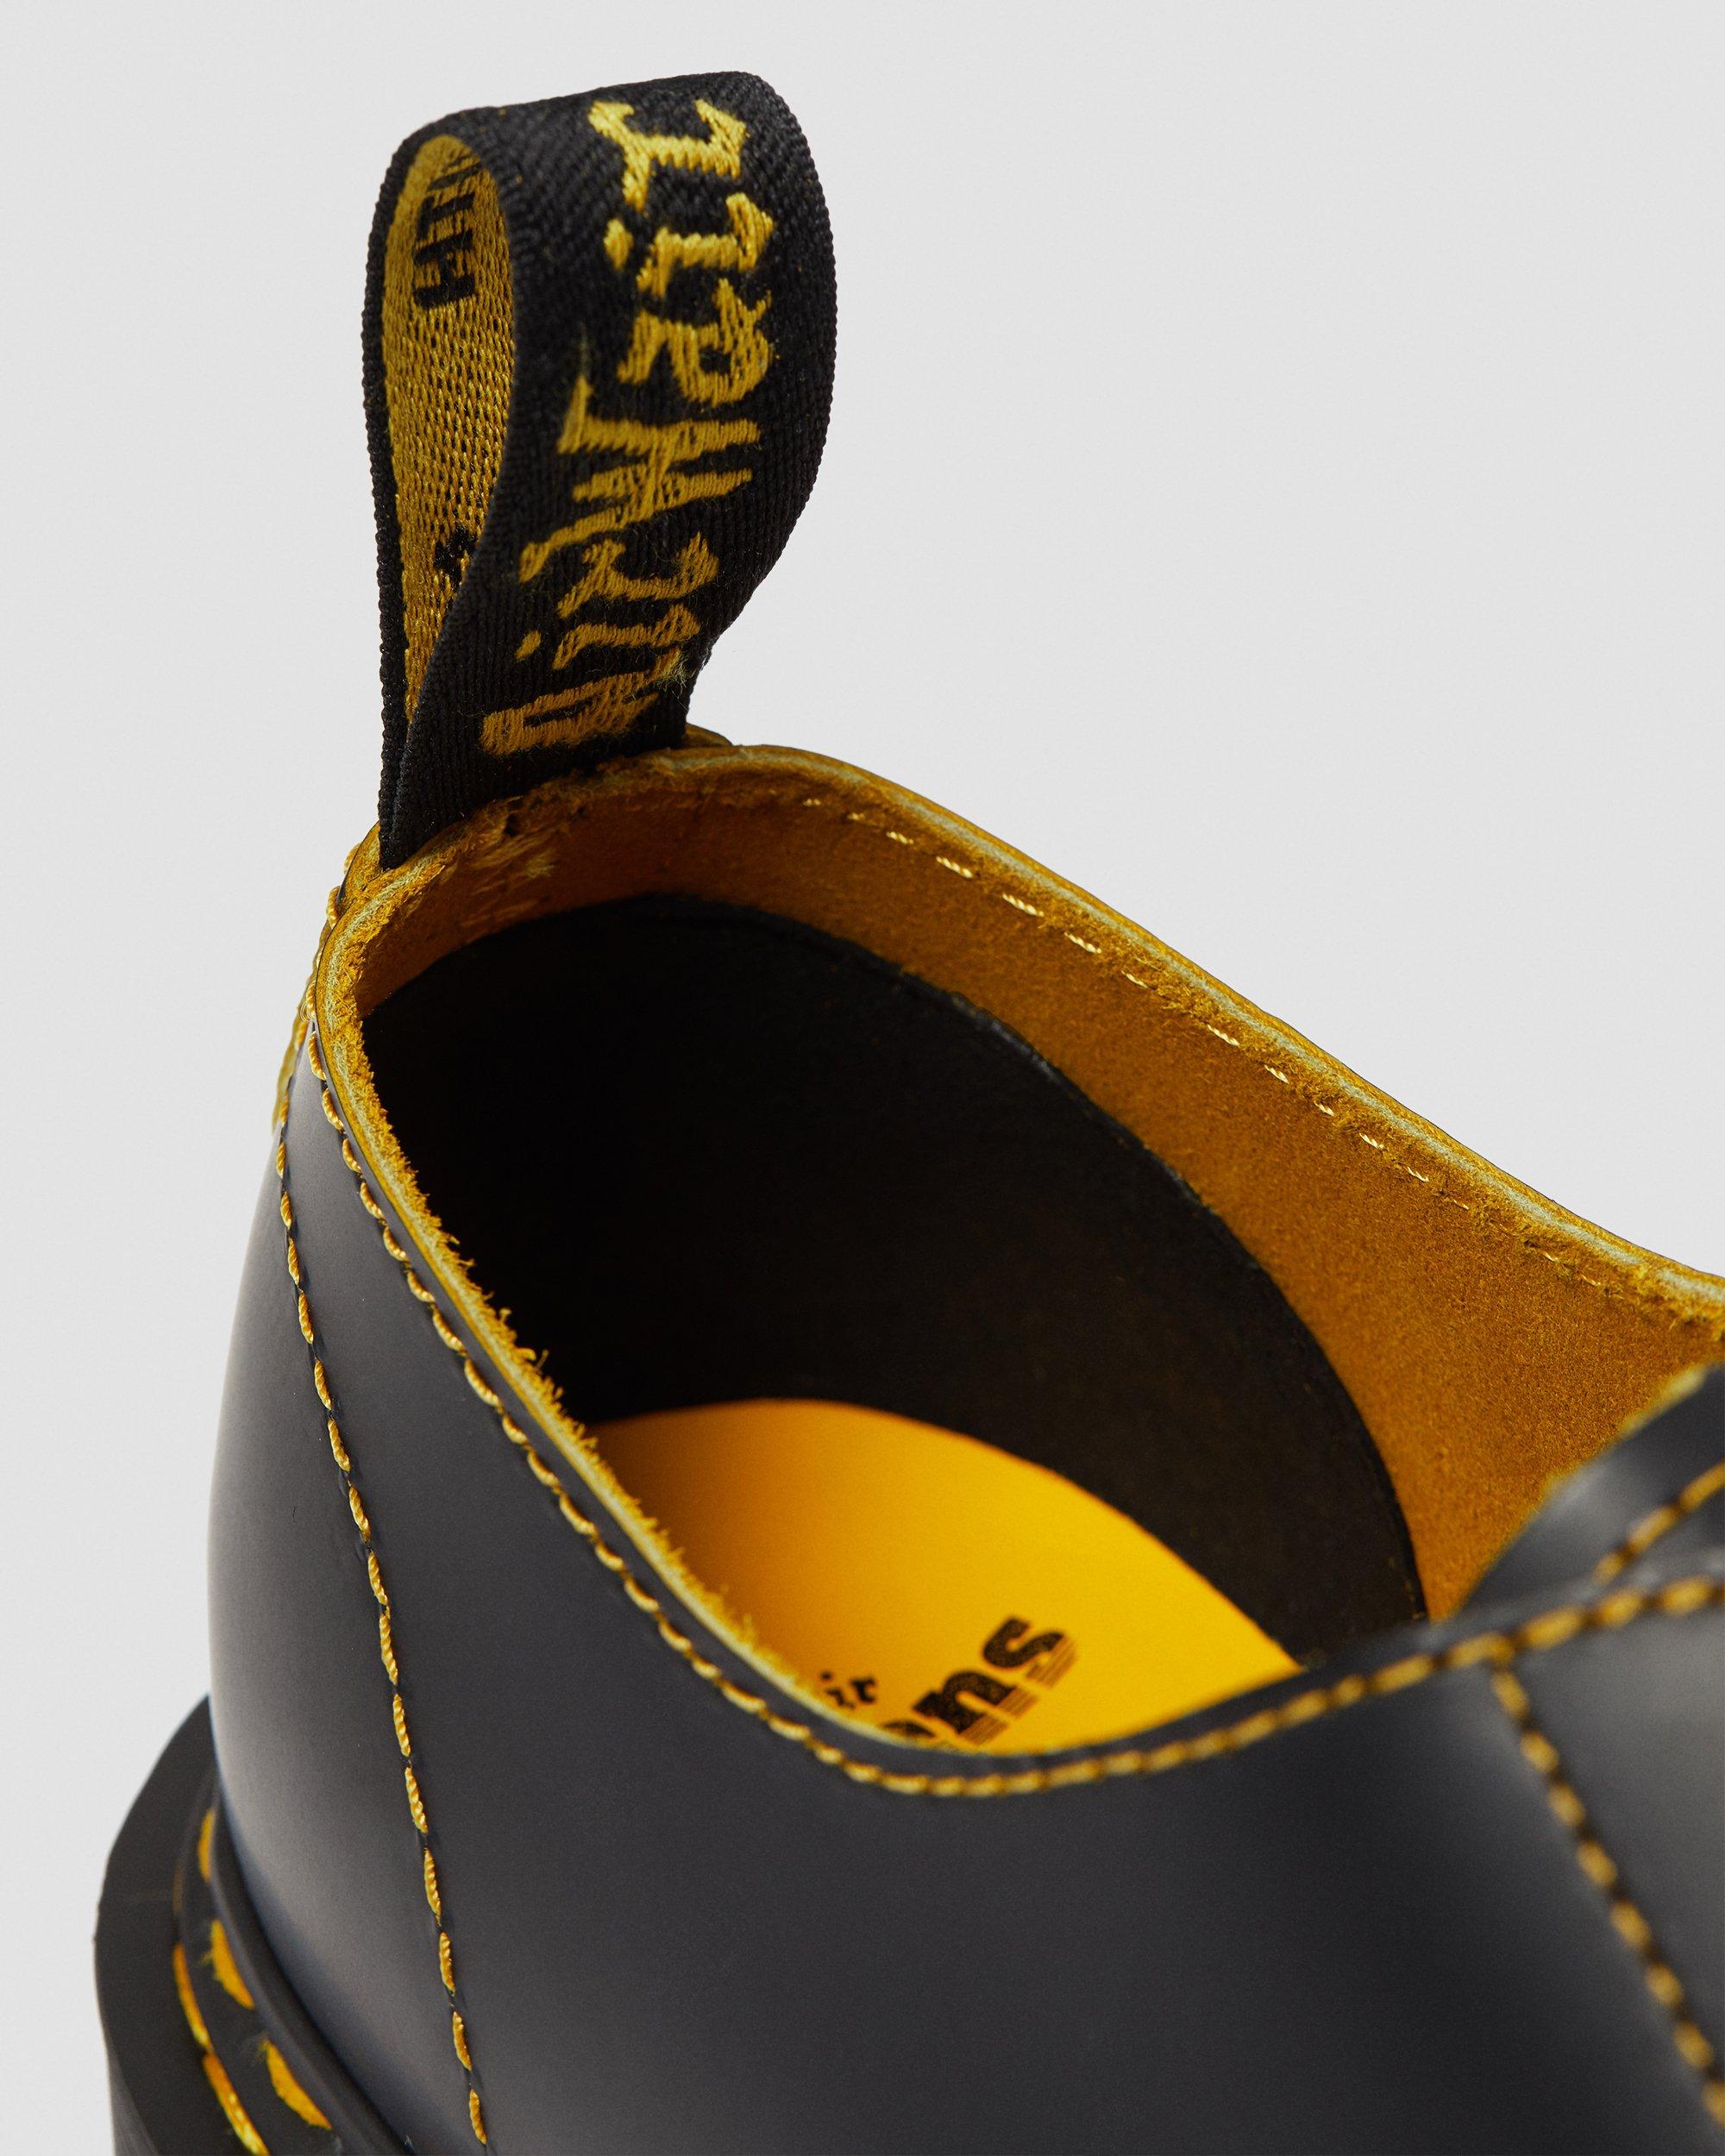 DR MARTENS 1461 Bex Double Stitch Leather Shoes